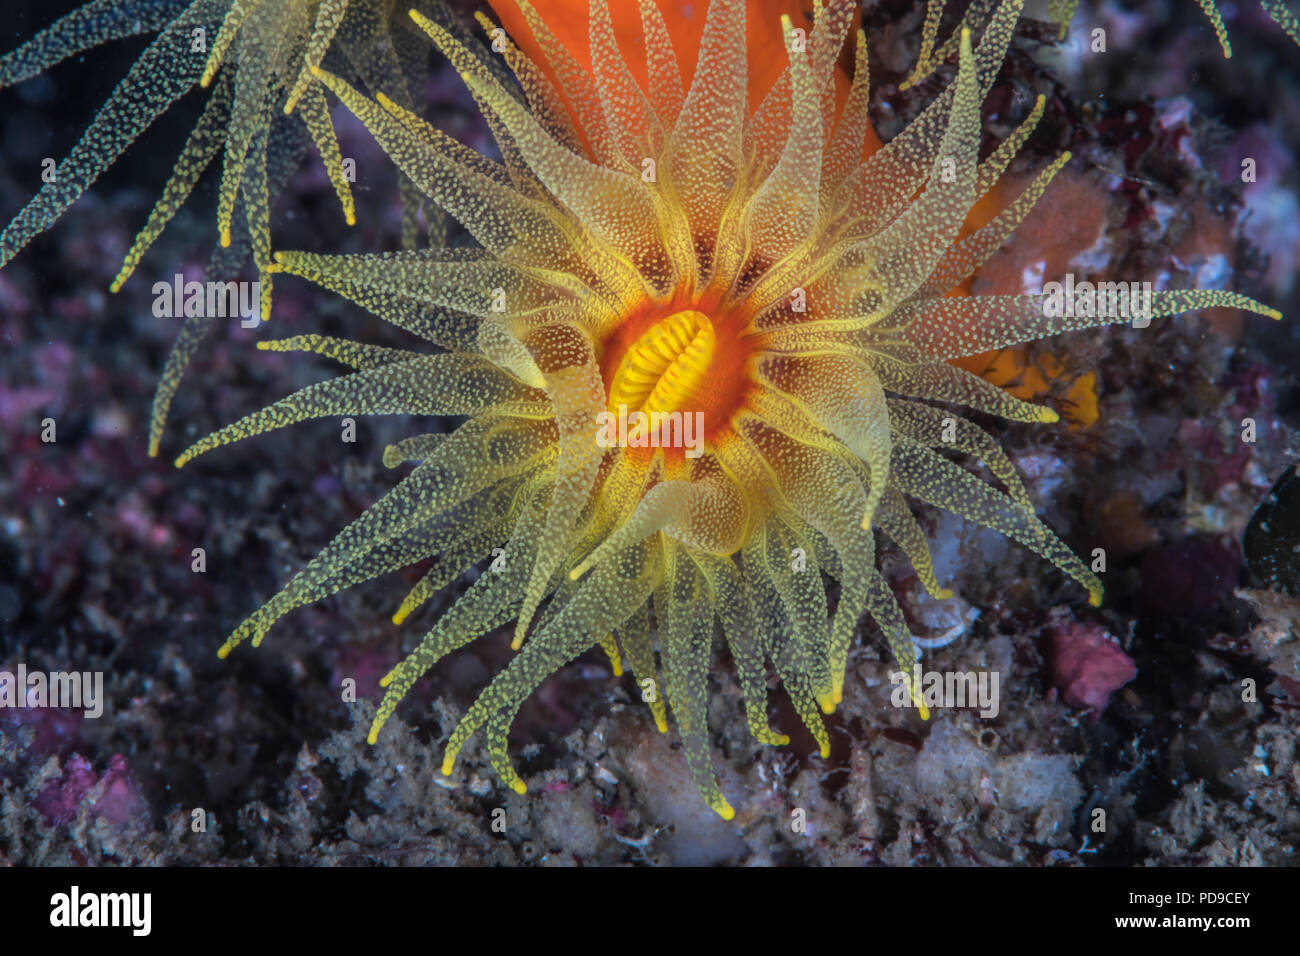 Orange cup coral, Dendrophyllia ijimai Yabe & Eguchi, 1934, spreading its translucent tentacles. Owase, Mie, Japan. -18m Stock Photo